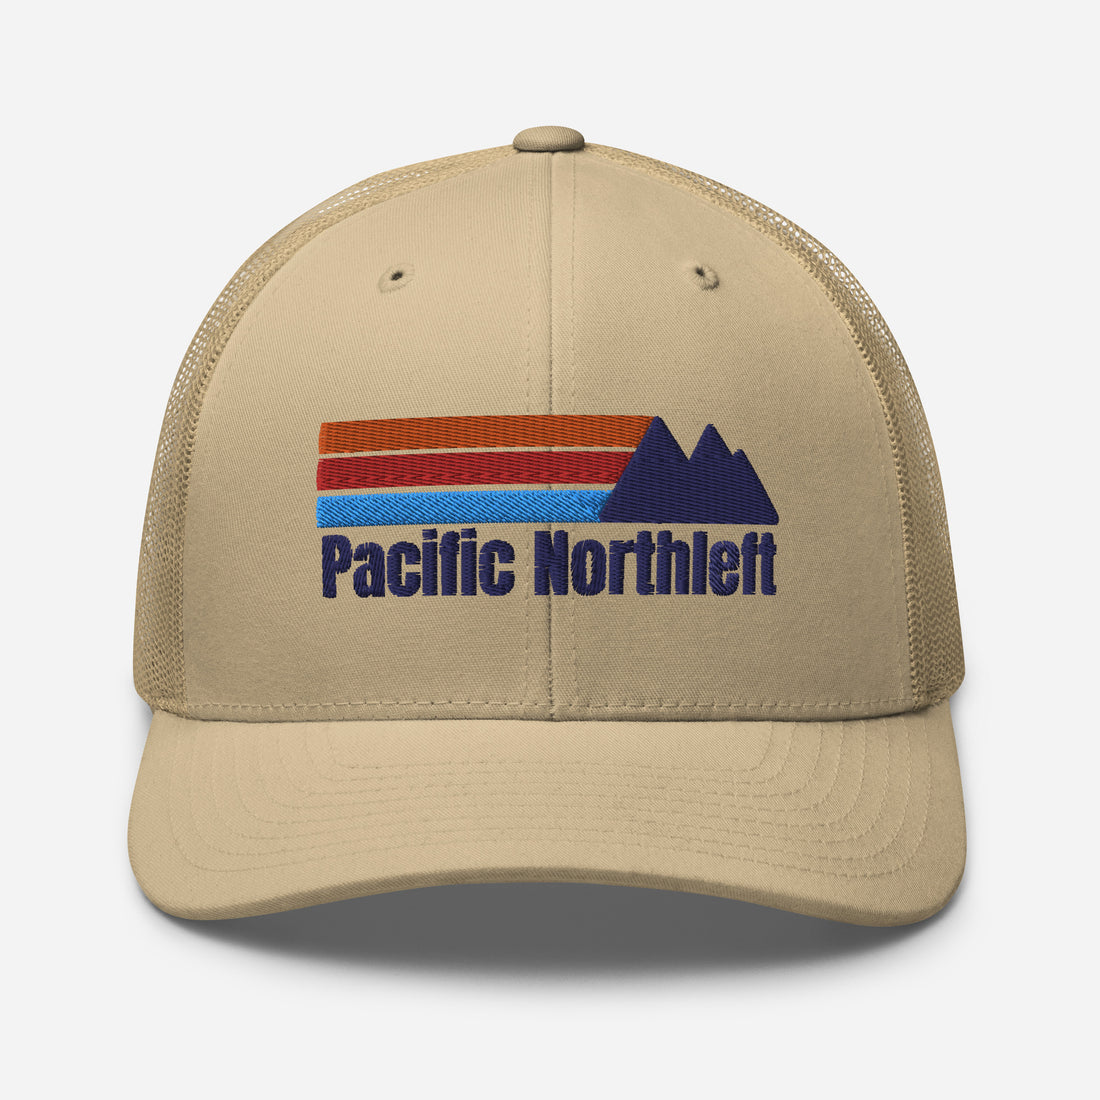 Pacific Northleft Retro Trucker Hat